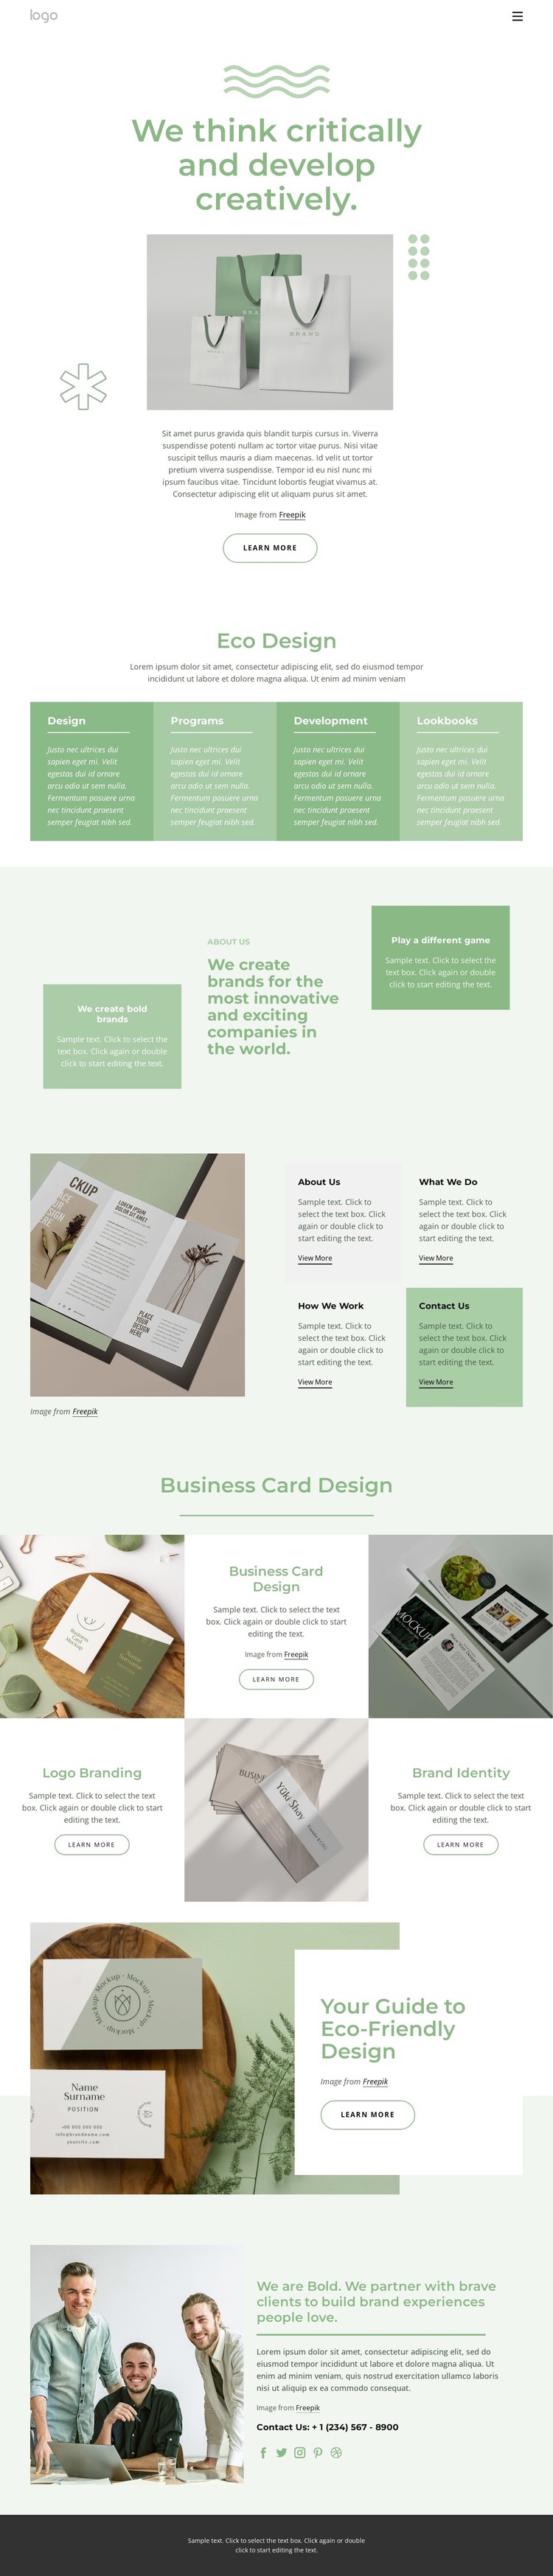 Ecodesign studio Web Design